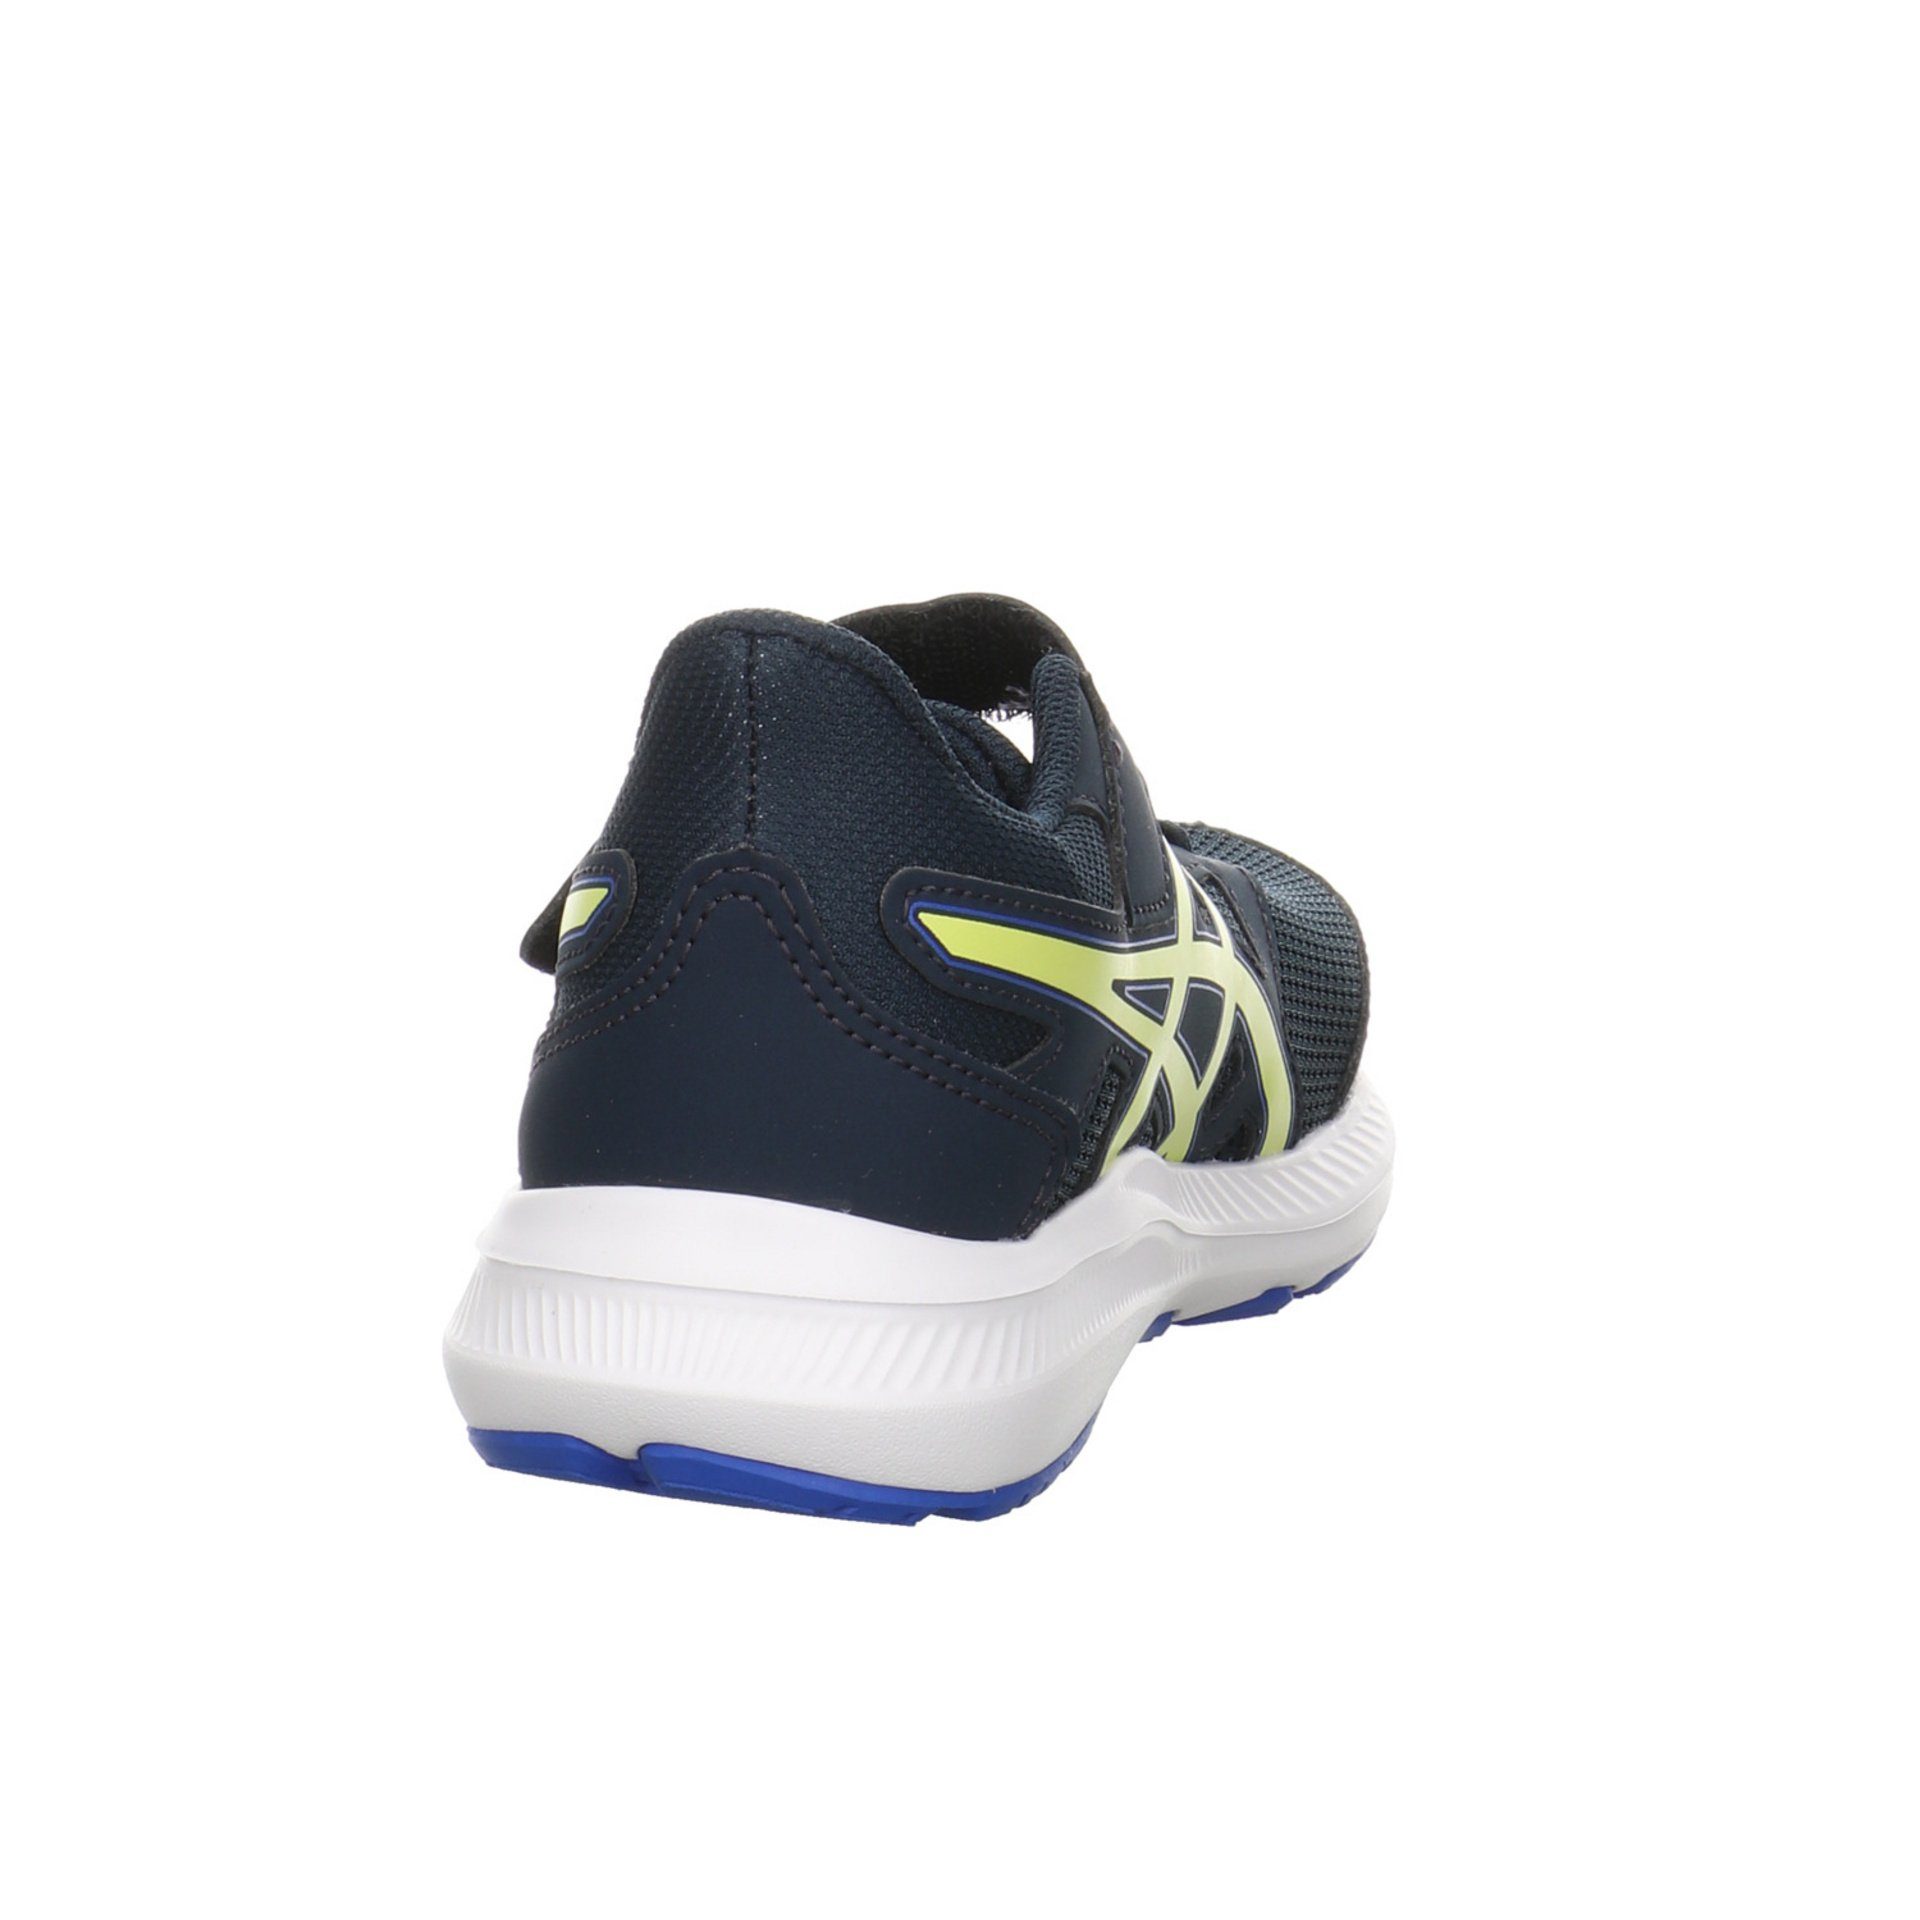 Sportschuh Schuhe Sneaker Sneaker PS Asics FRENCH 4 Jolt YEL Mädchen BLUE/GLOW Synthetikkombination